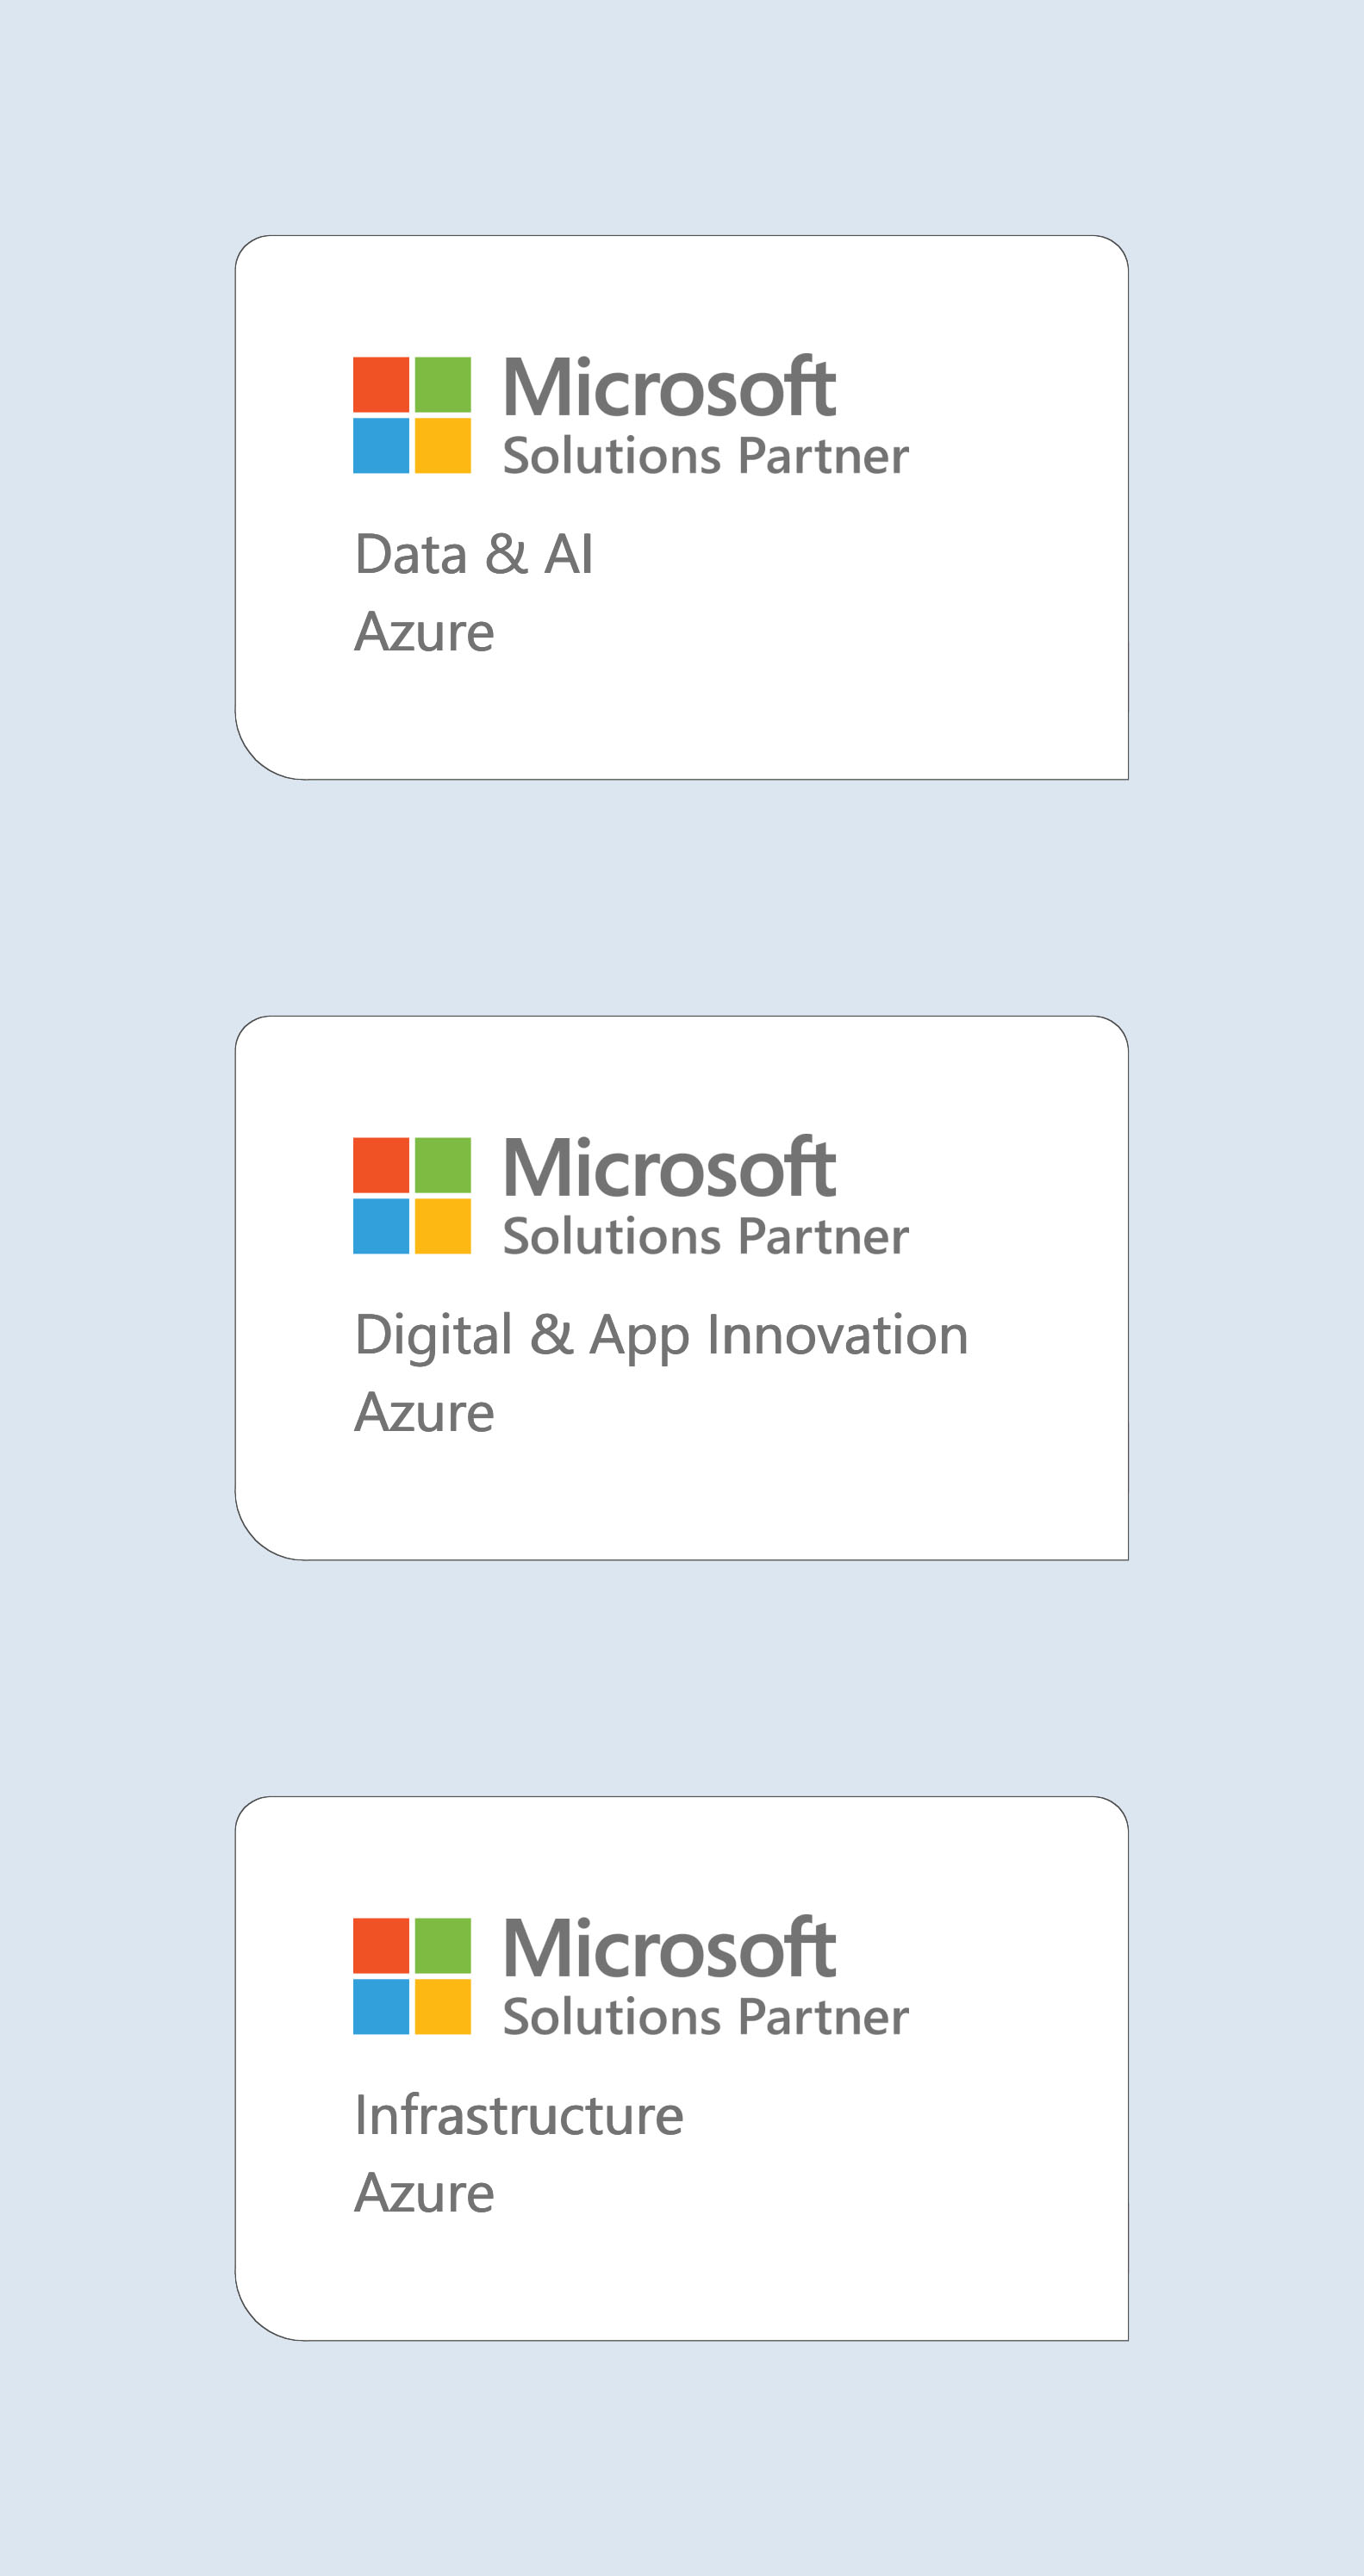 Microsoft（マイクロソフト） ソリューション パートナー 認定 - Data & AI, Digital & App Innovation, Infrastructure